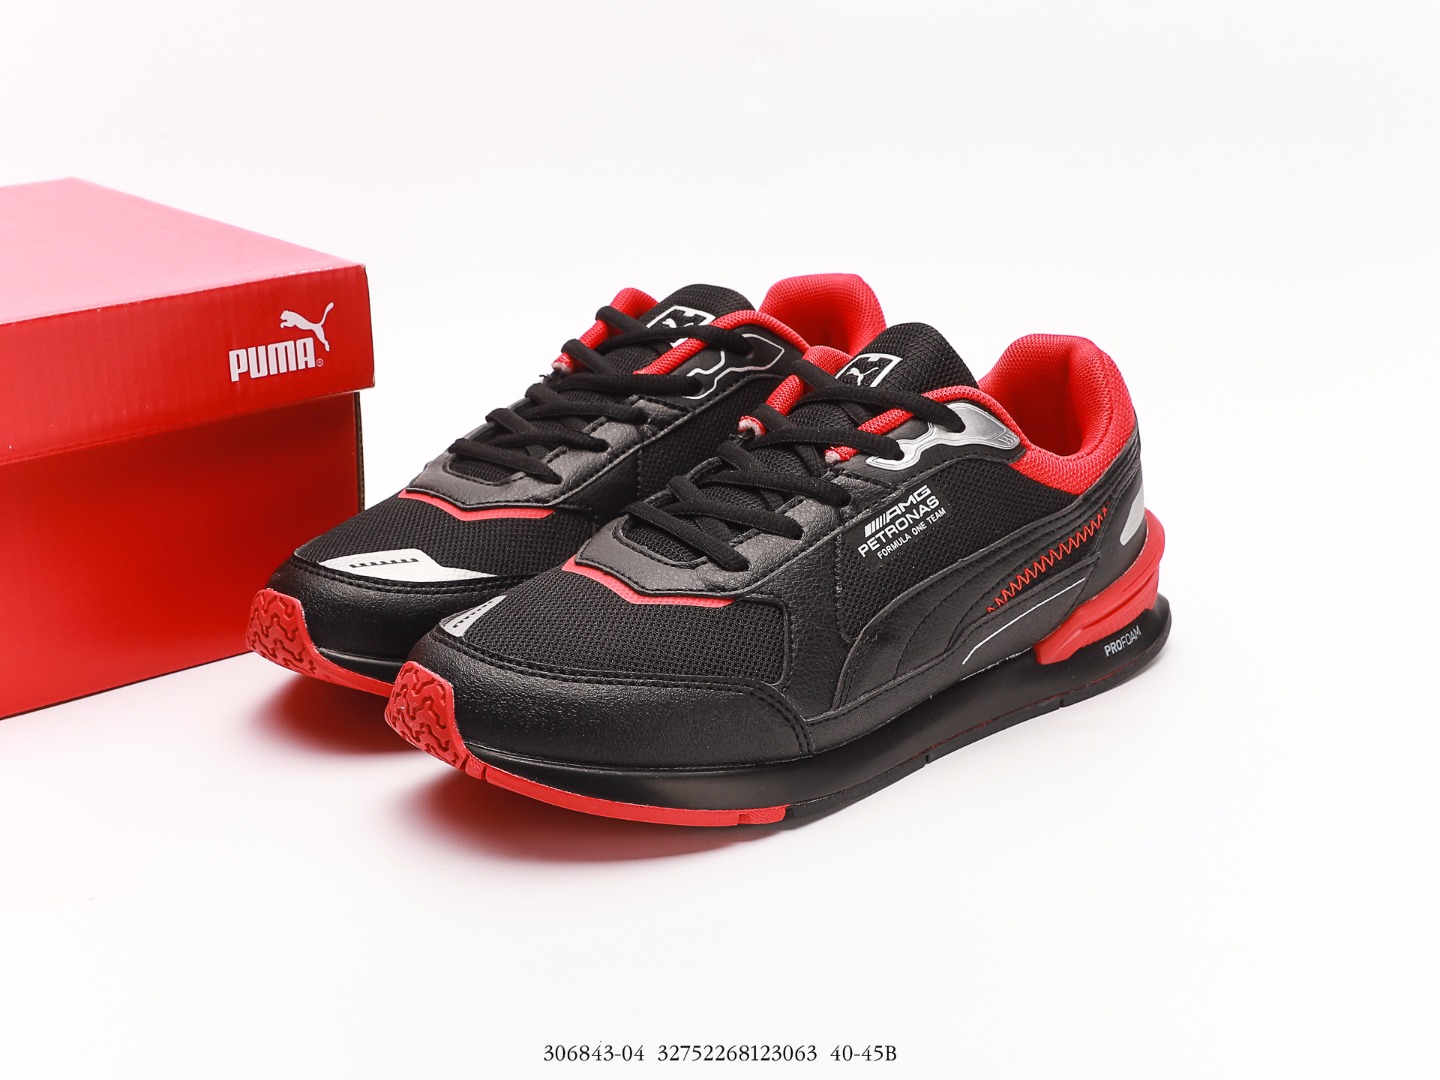 Puma shoes and the decades-long motorsport connection - carsales.com.au